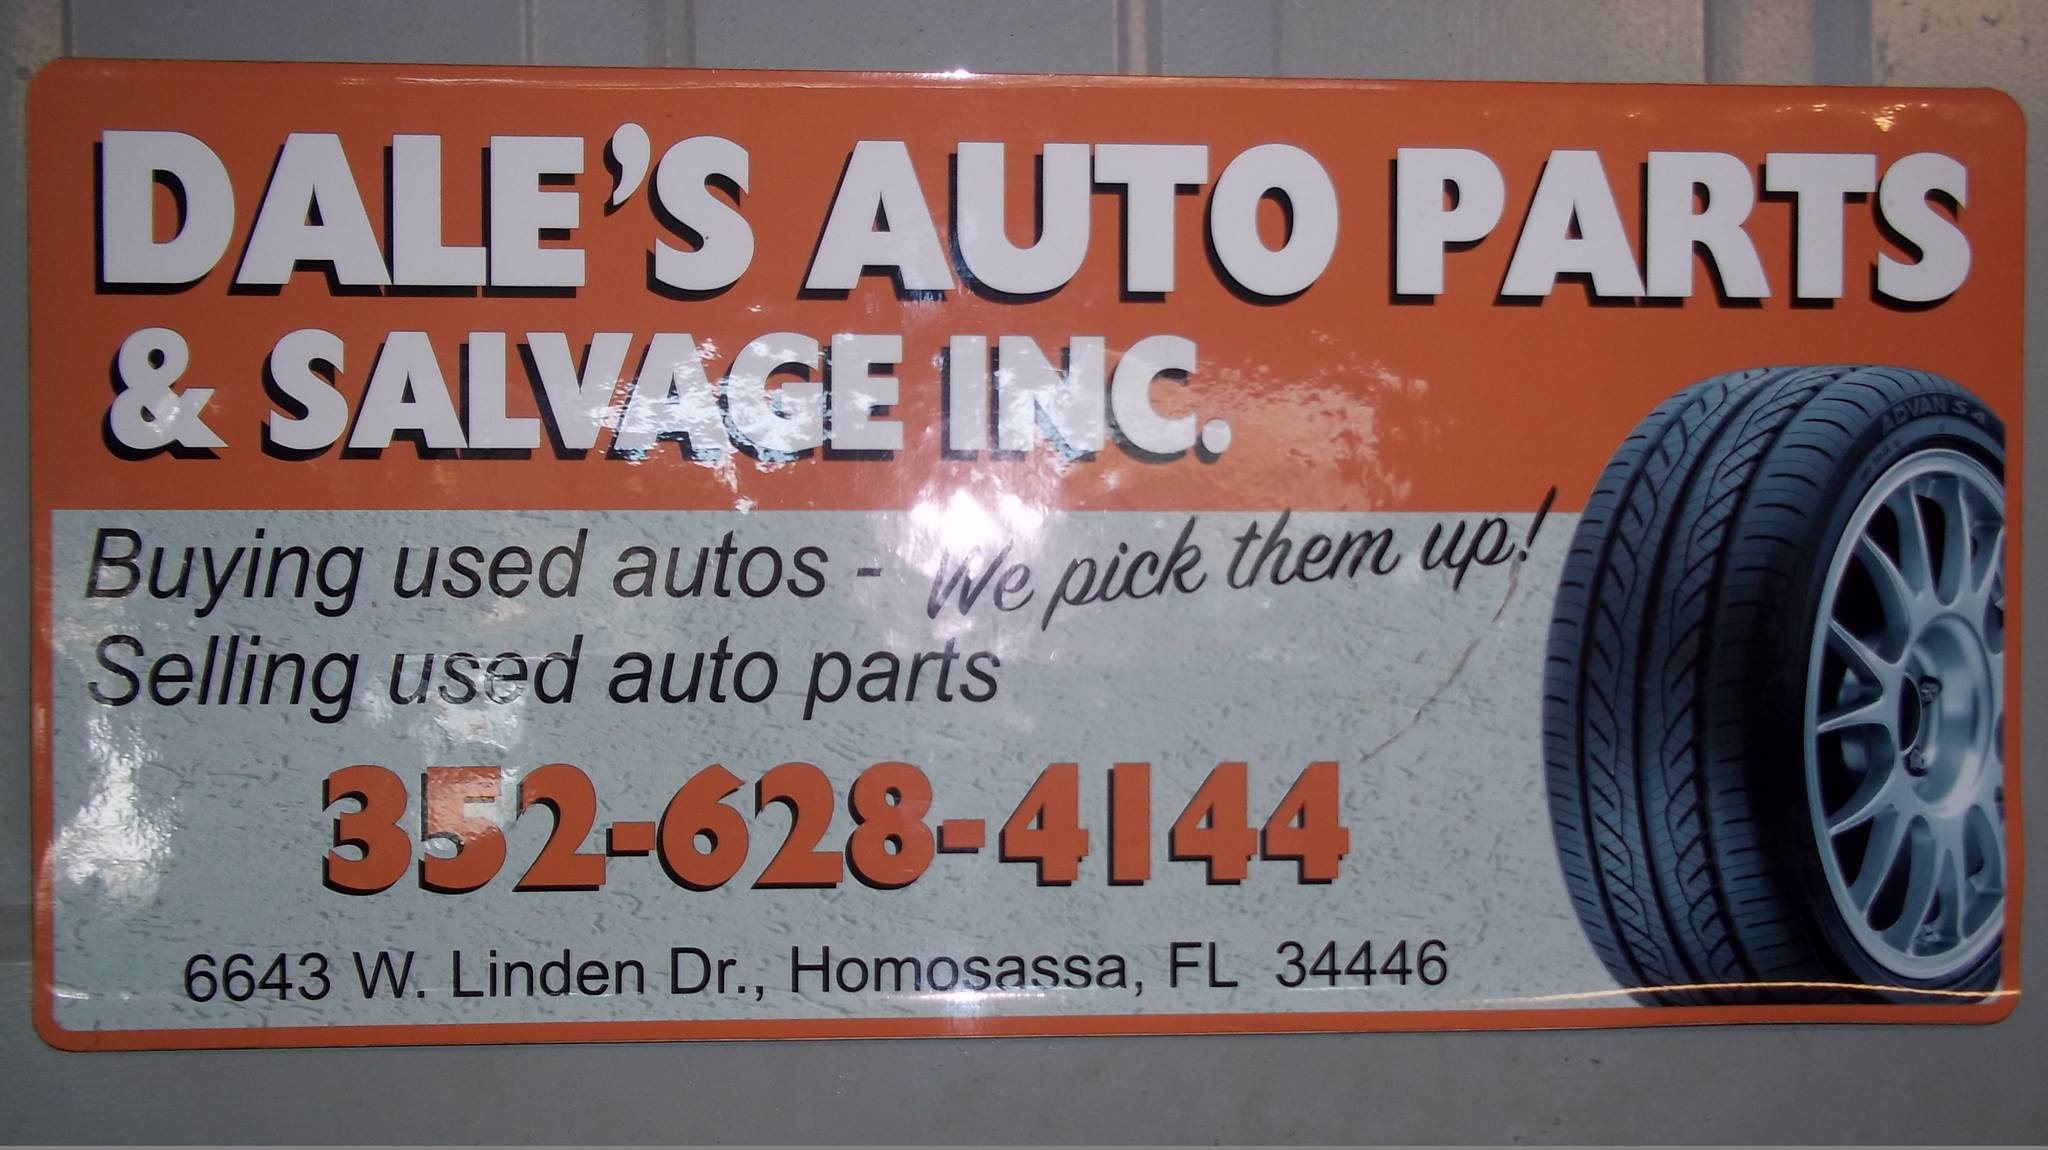 Dale's Auto Parts & Salvage